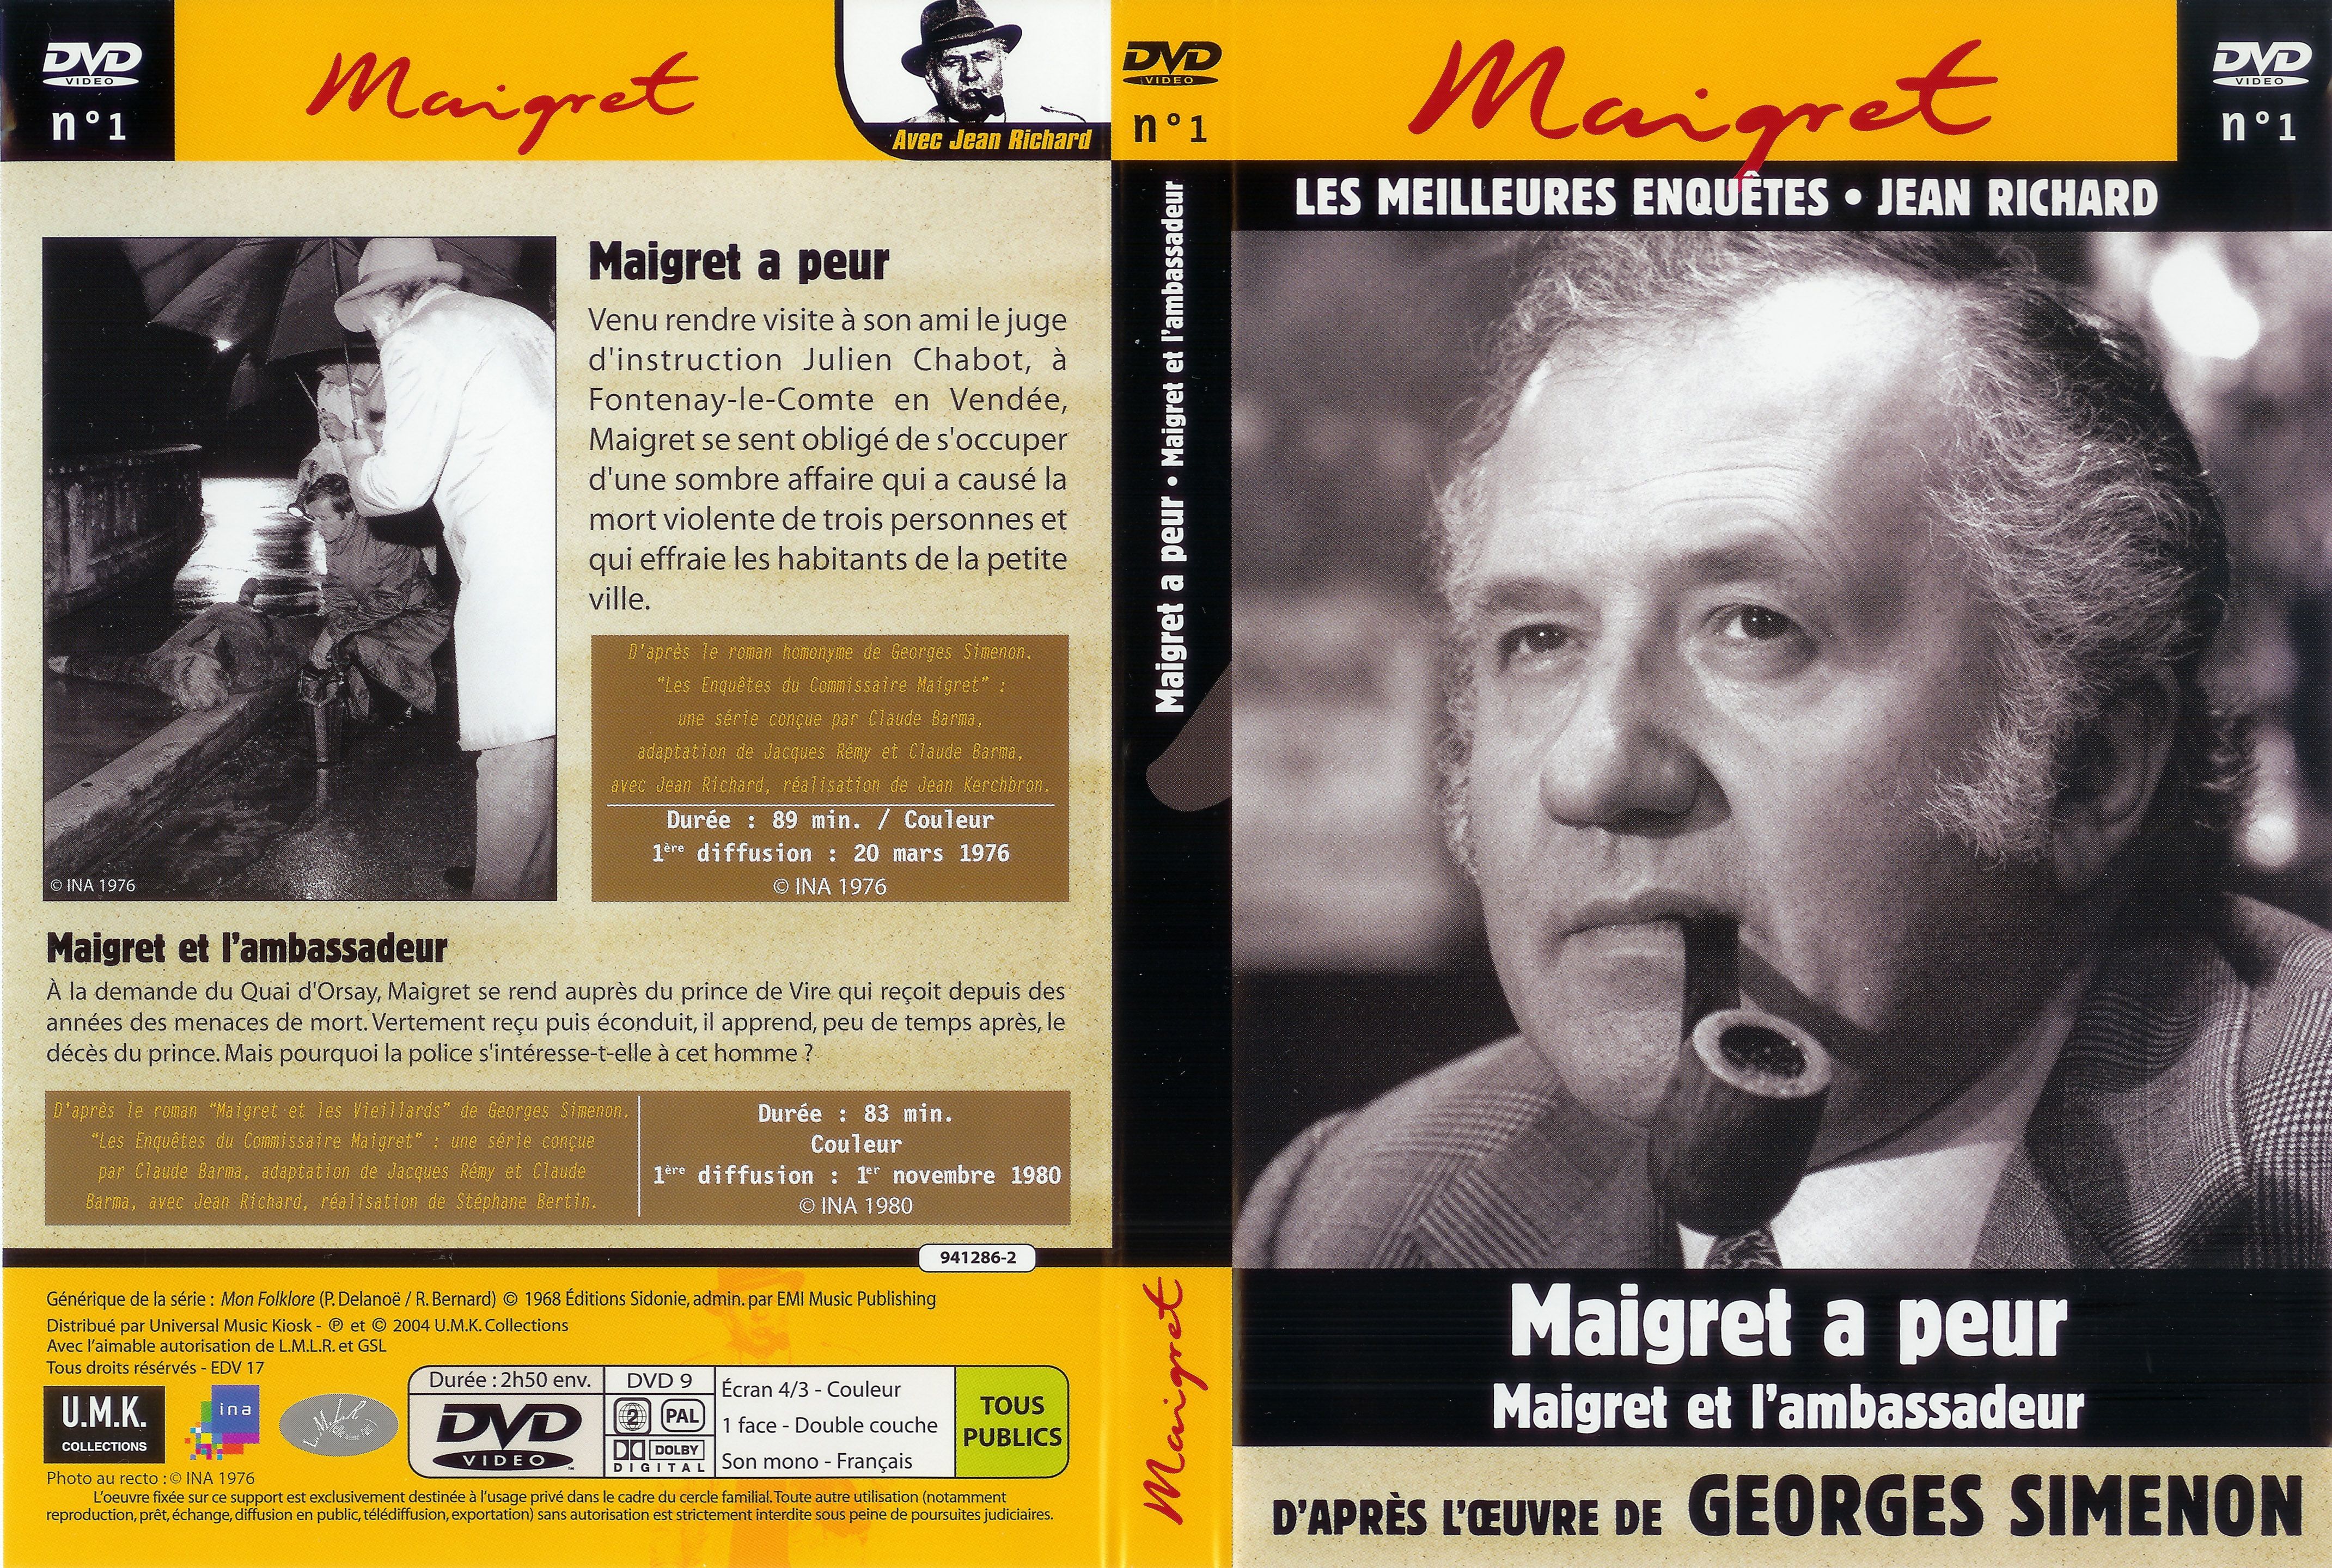 Jaquette DVD Maigret (Jean Richard) vol 01